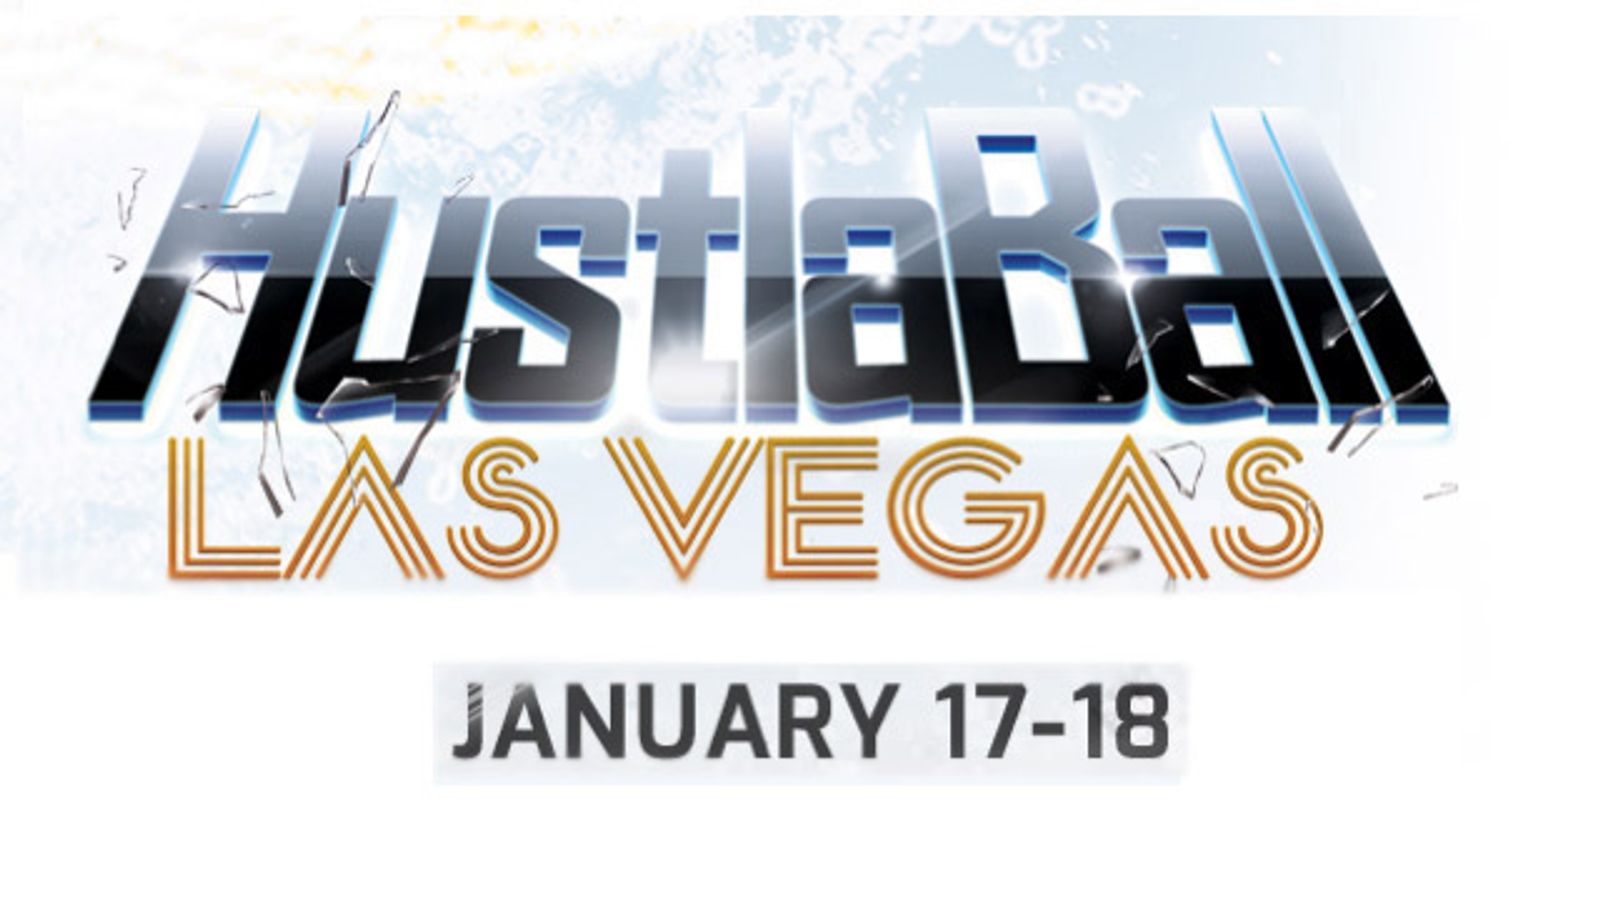 HustlaBall Las Vegas 2015 Is Coming January 17 & 18